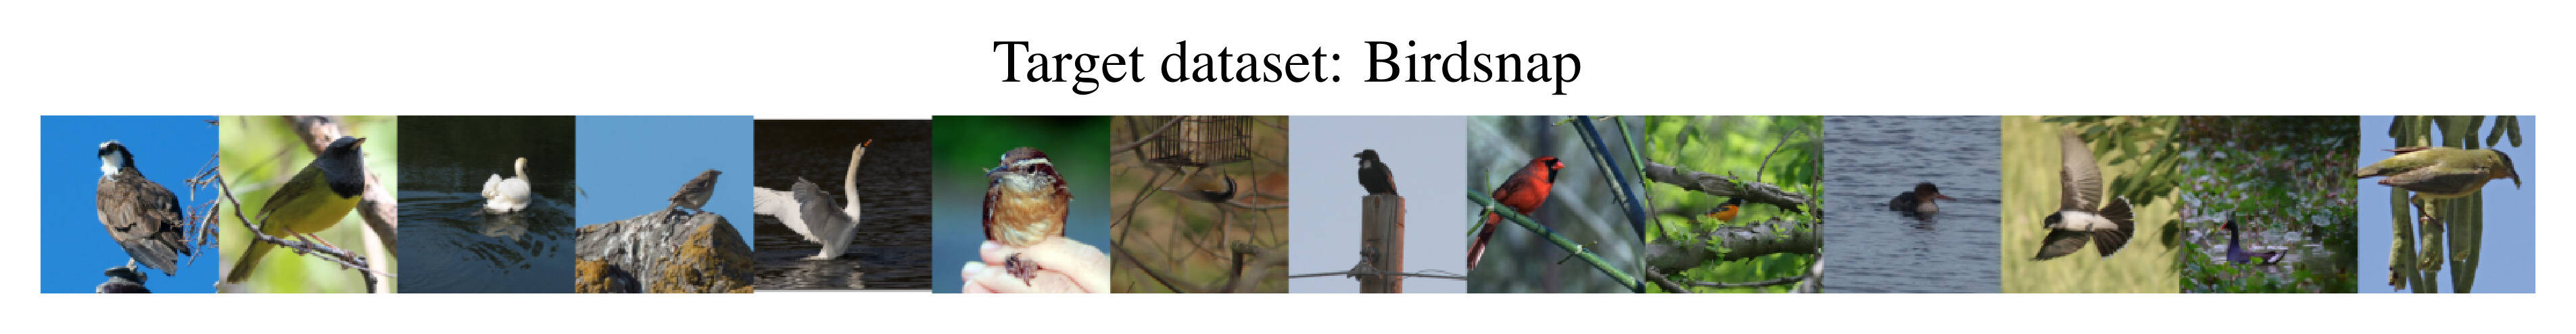 Birdsnap target dataset.